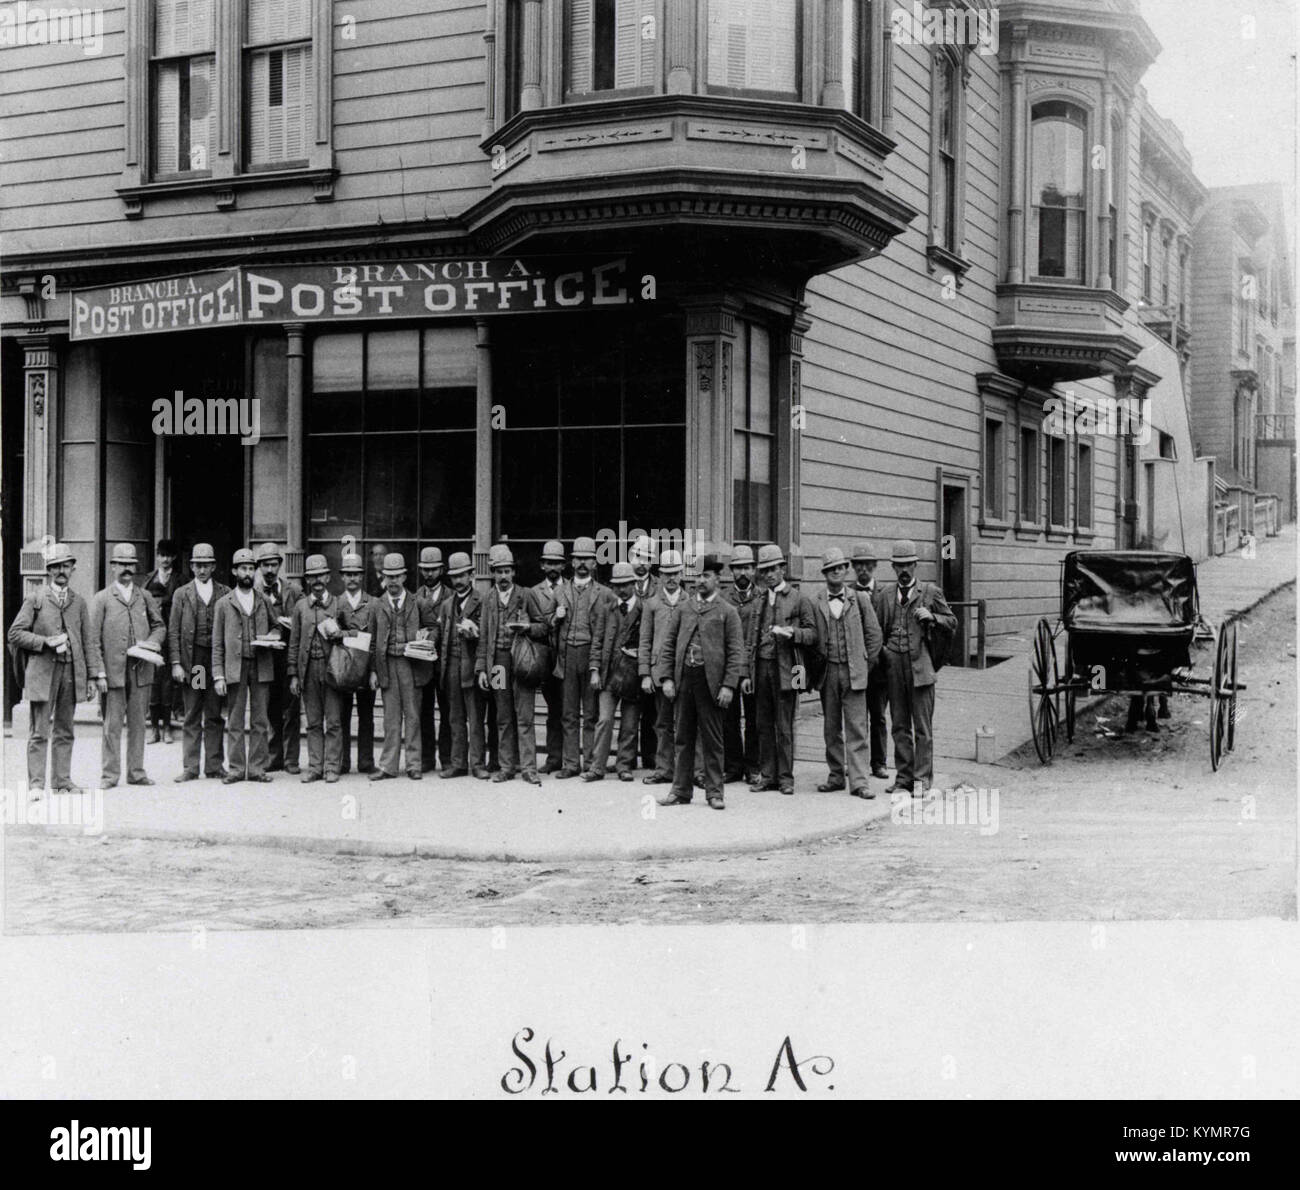 San Francisco, California, Post Office, Station A 2550414067 o Stock Photo